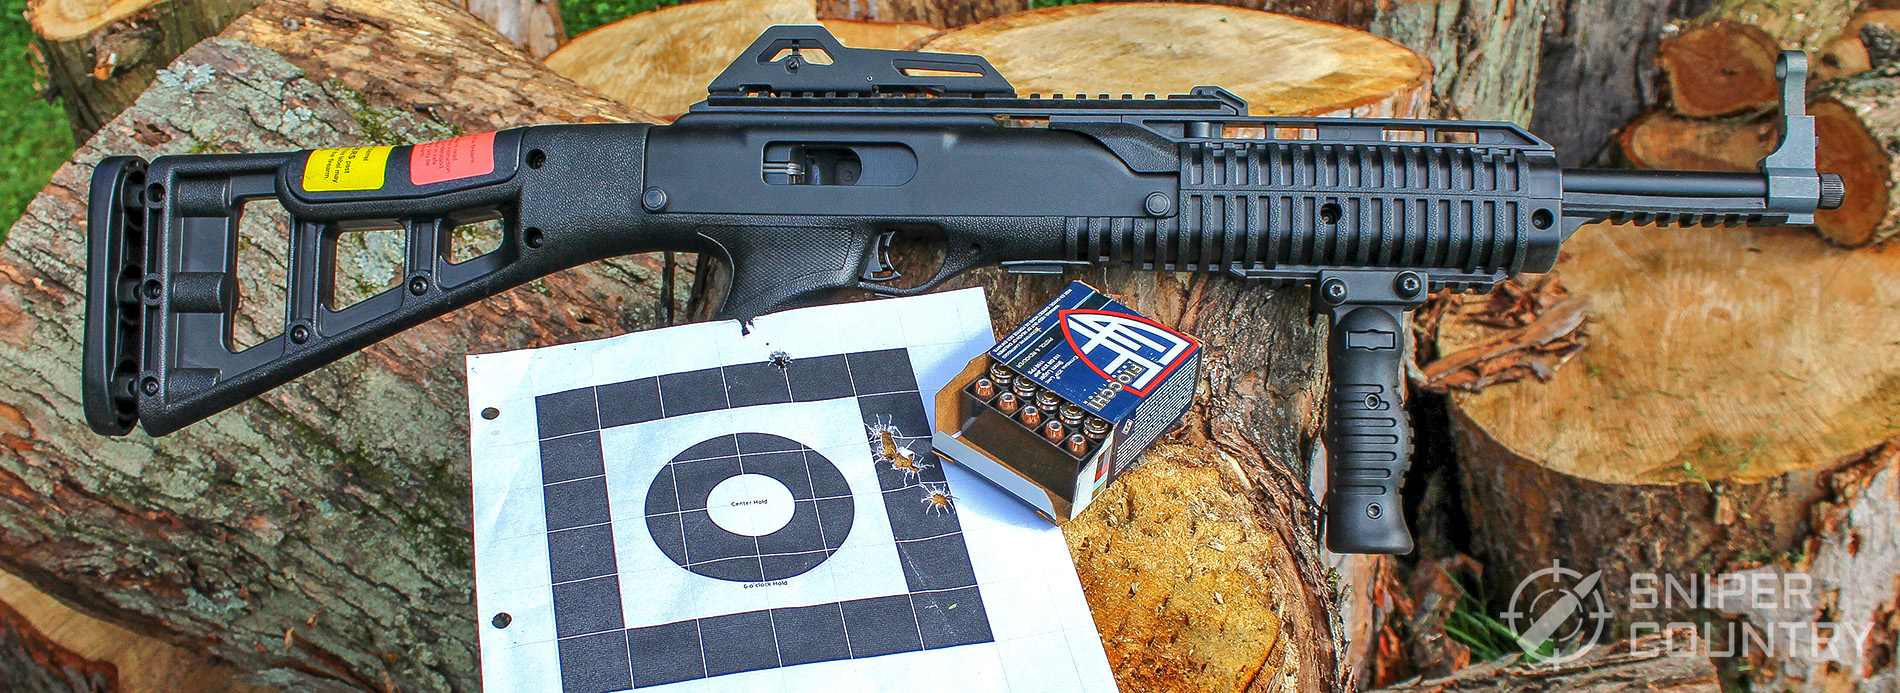 hi point 9mm rifle